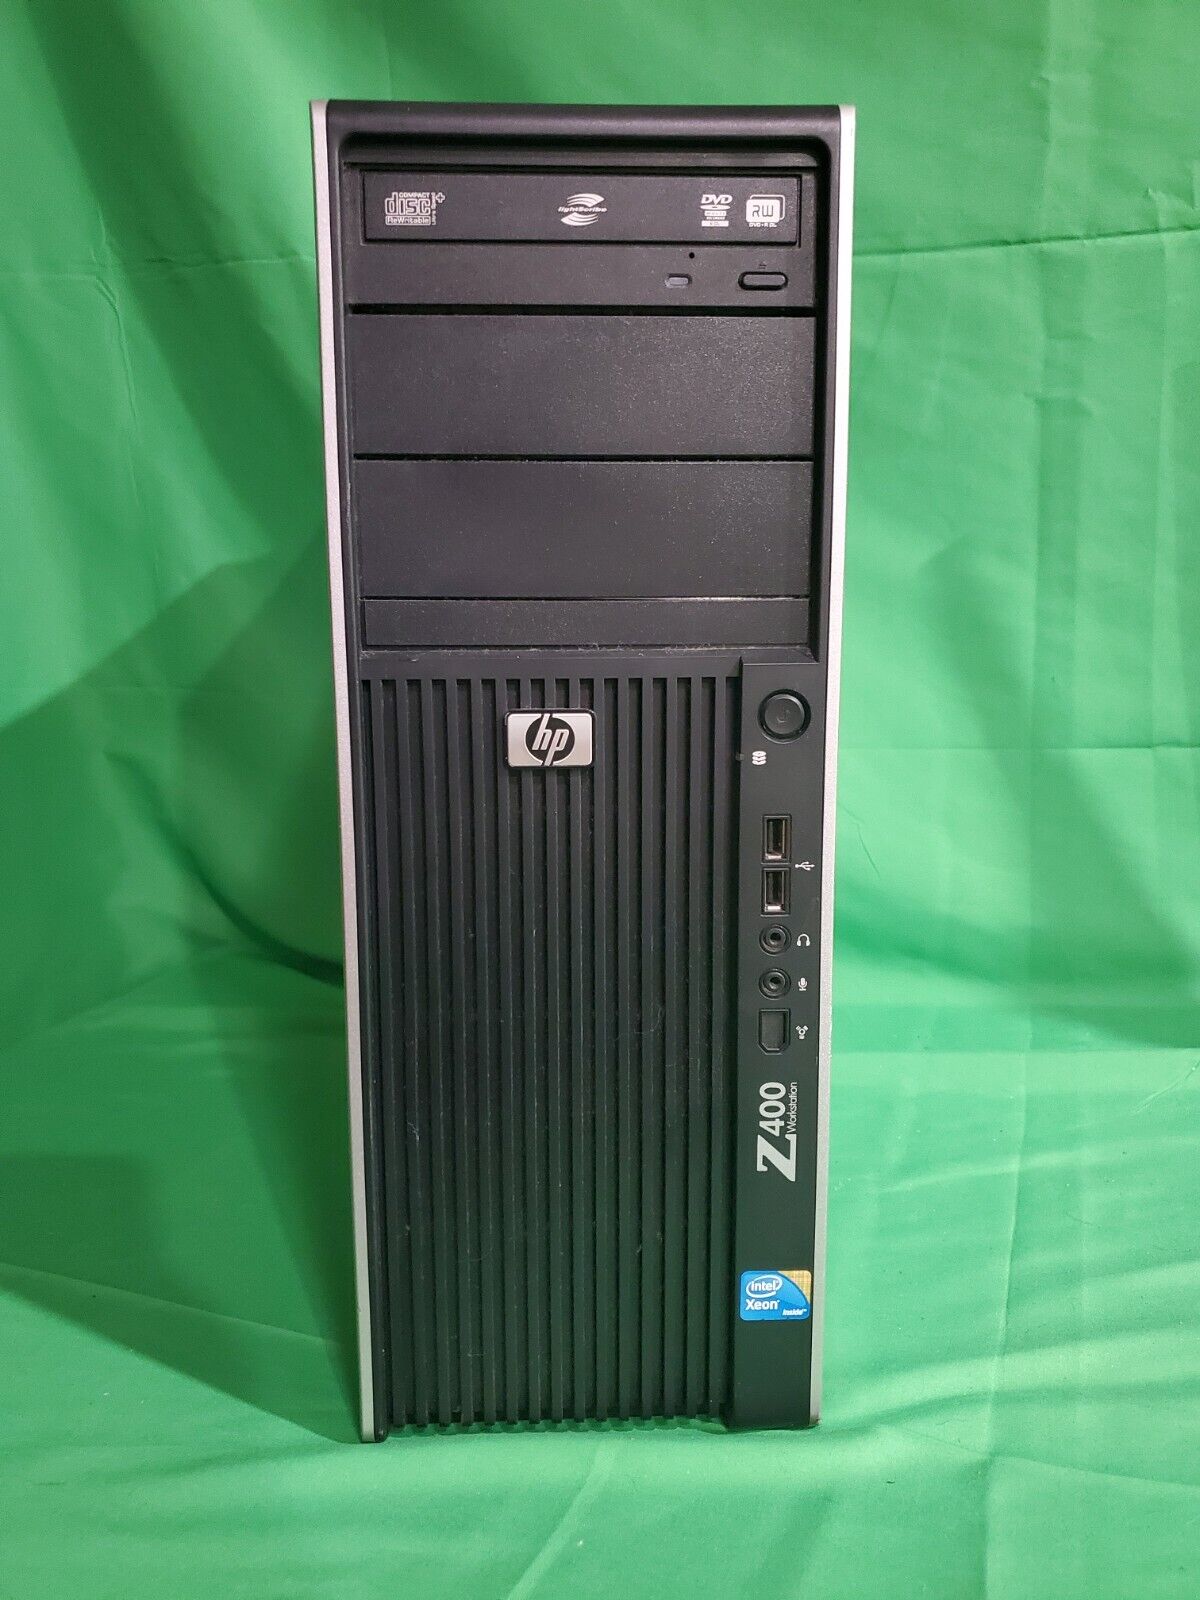 Verovering niet hoog HP Z400 workstation - Intel Xeon W3520 2.67GHz, 4GB Ram *Read Description |  eBay